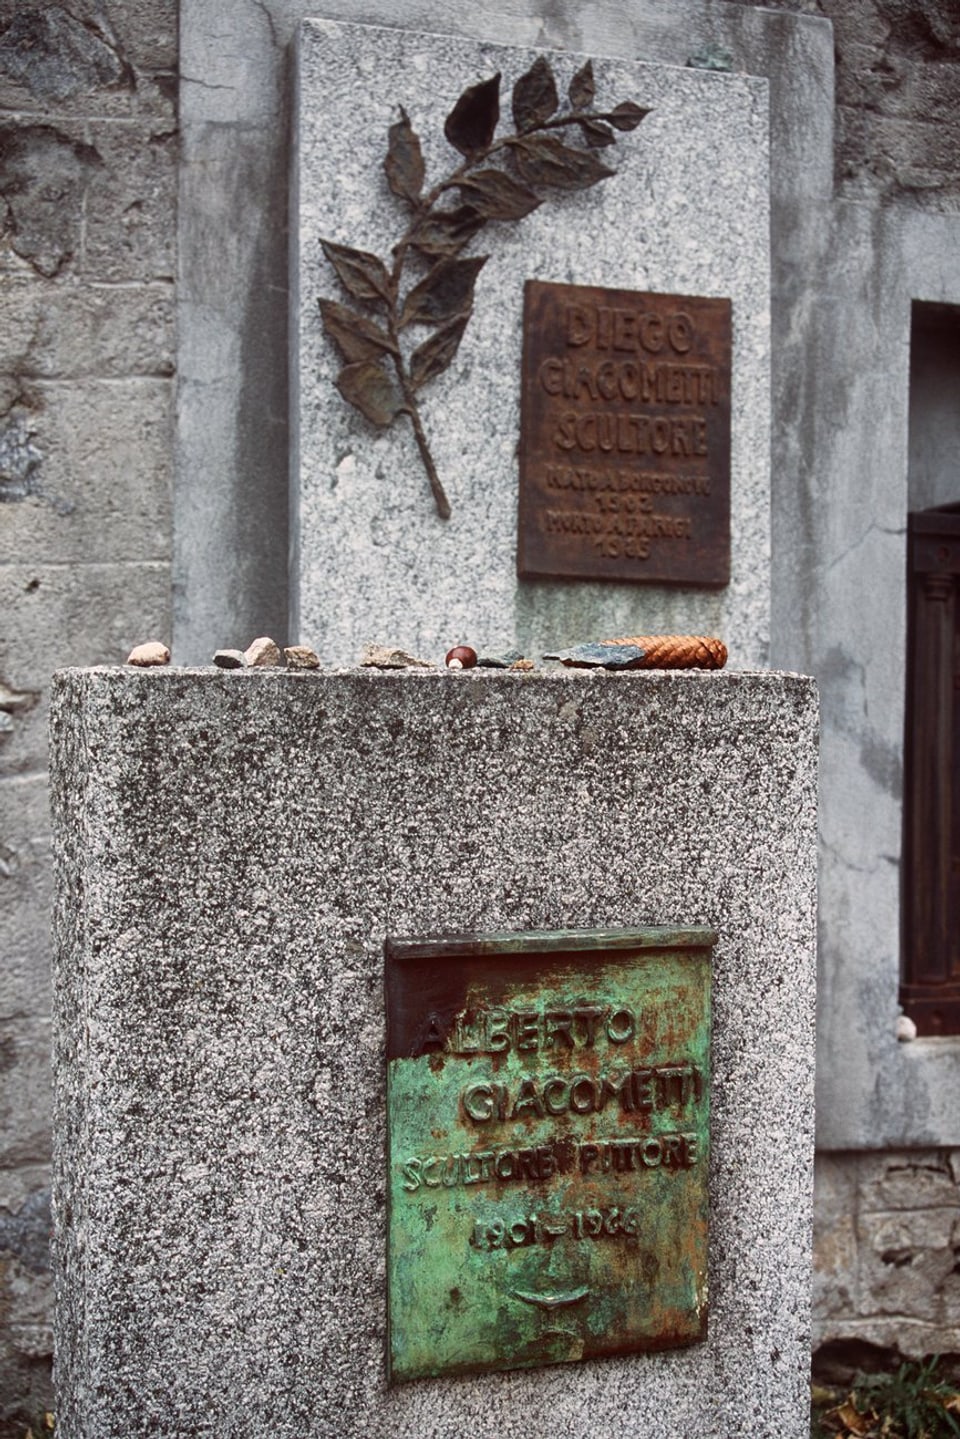 Grabtafel von Alberto Giacometti auf dem Friedhof San Giorgiio in Borgonovo. 